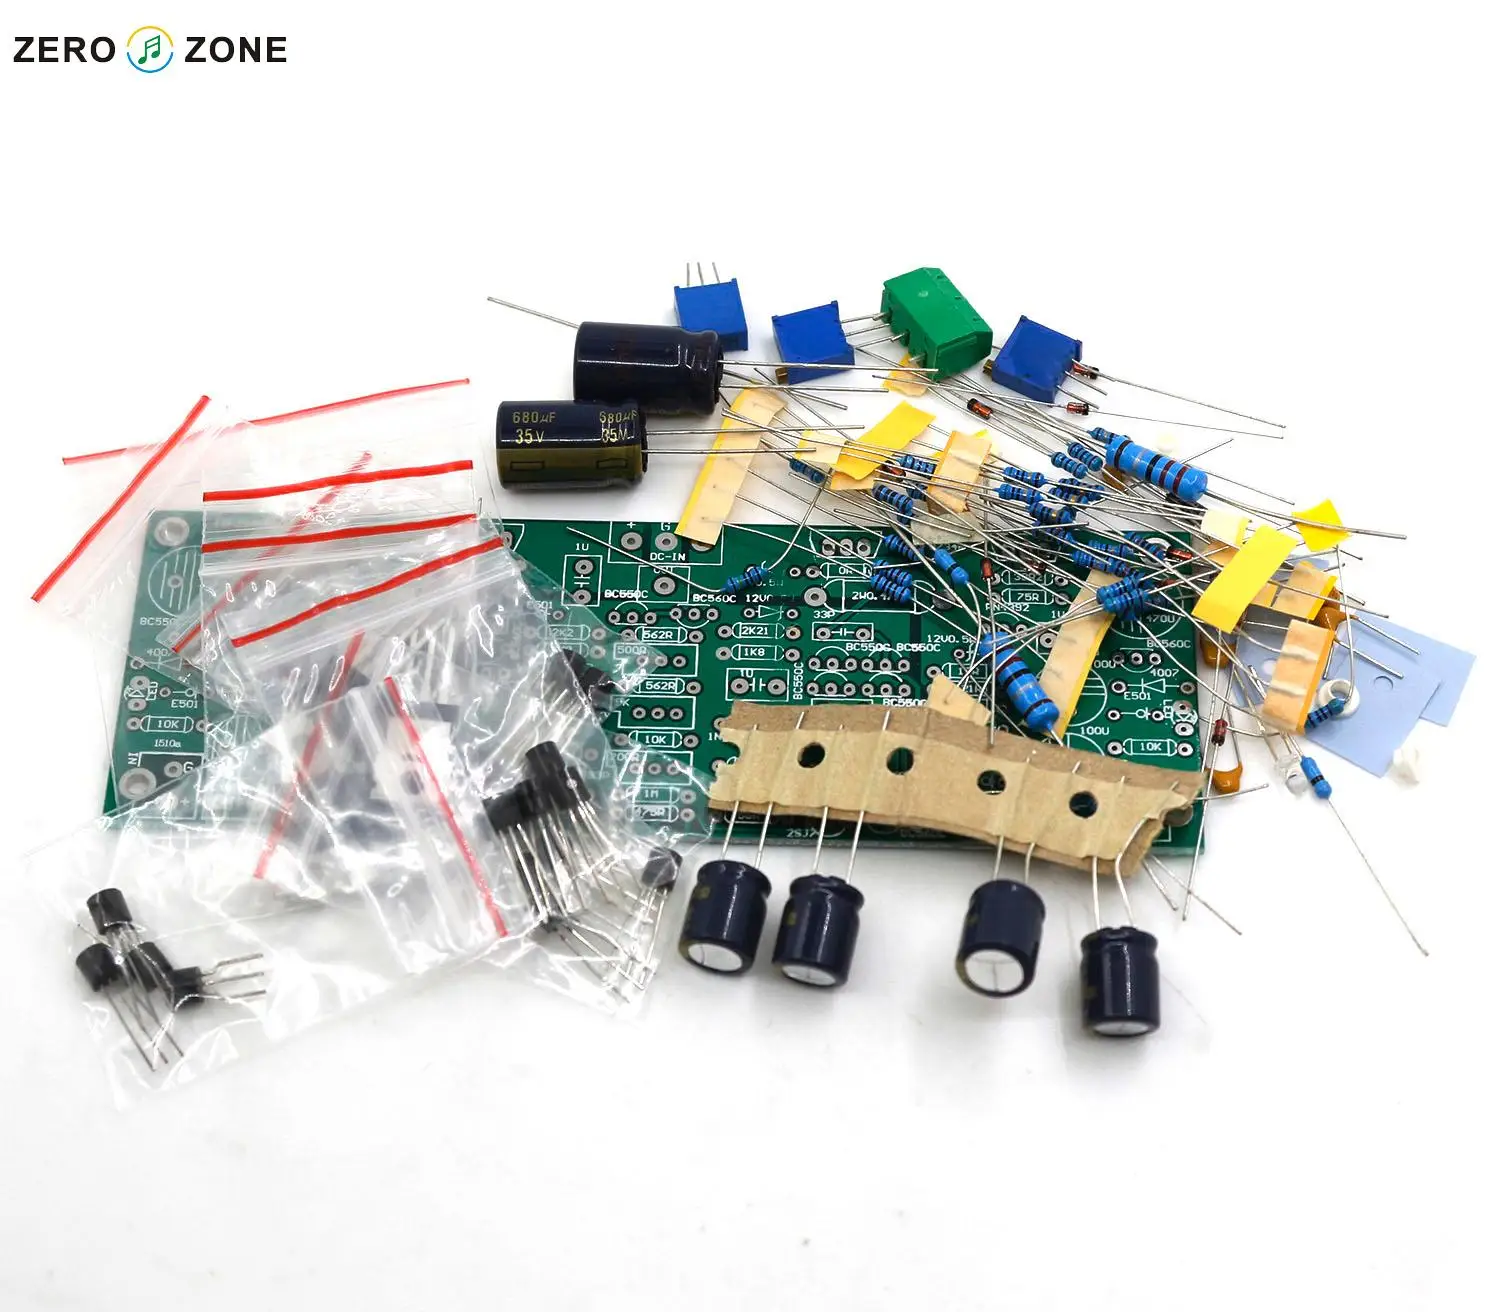 

B22 (Reference Beta 22 β22 Circuit) HI-END Reference Level Amp Kit